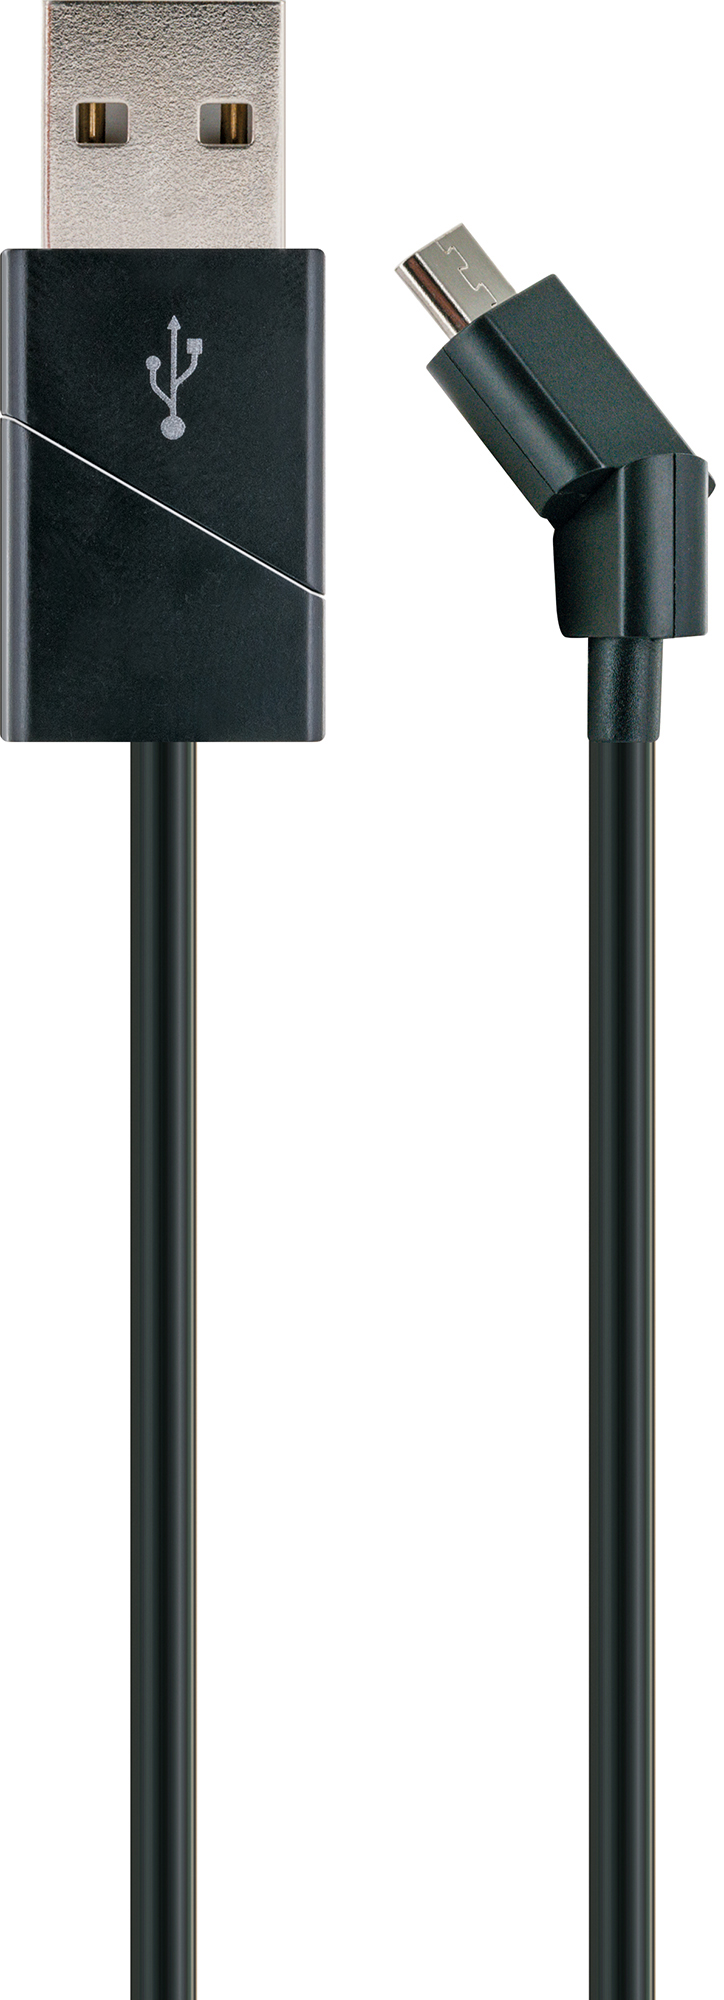 Sync A SCHWAIGER USB Ladekabel, Micro 533-, Micro B m, Stecker Stecker, 1,2 drehbar zu & USB -LKW120M 2.0 Schwarz USB